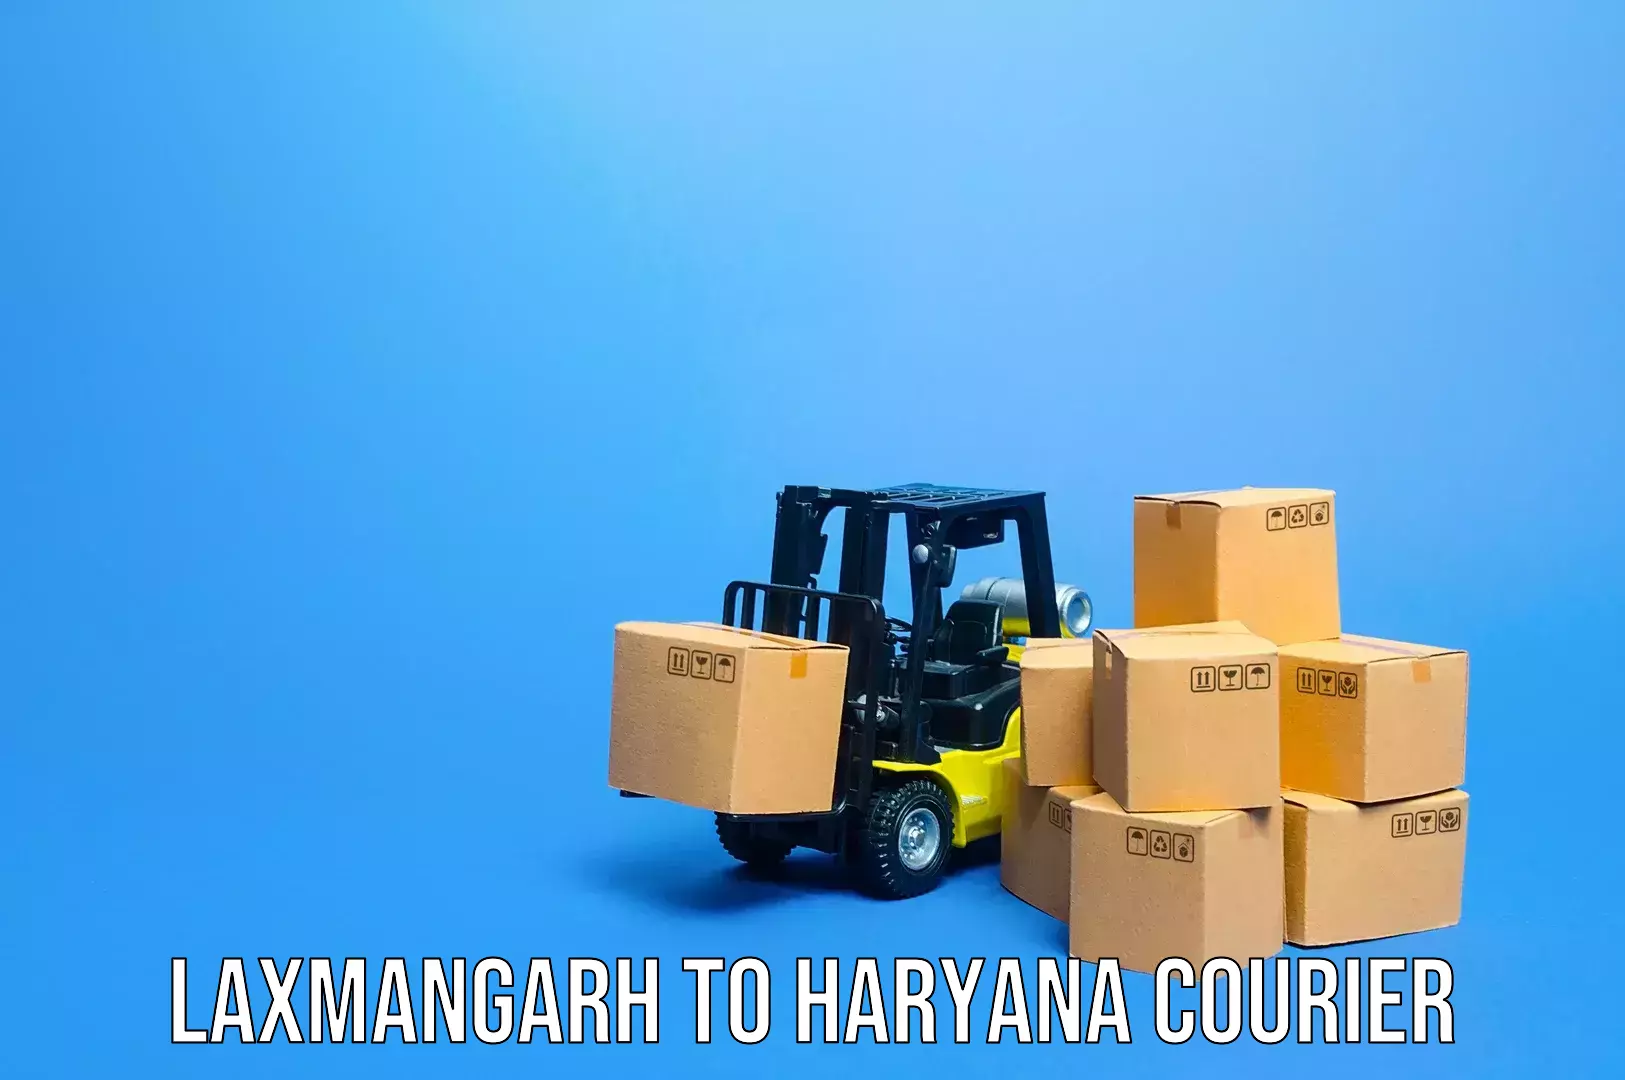 Luggage shipment specialists Laxmangarh to Haryana